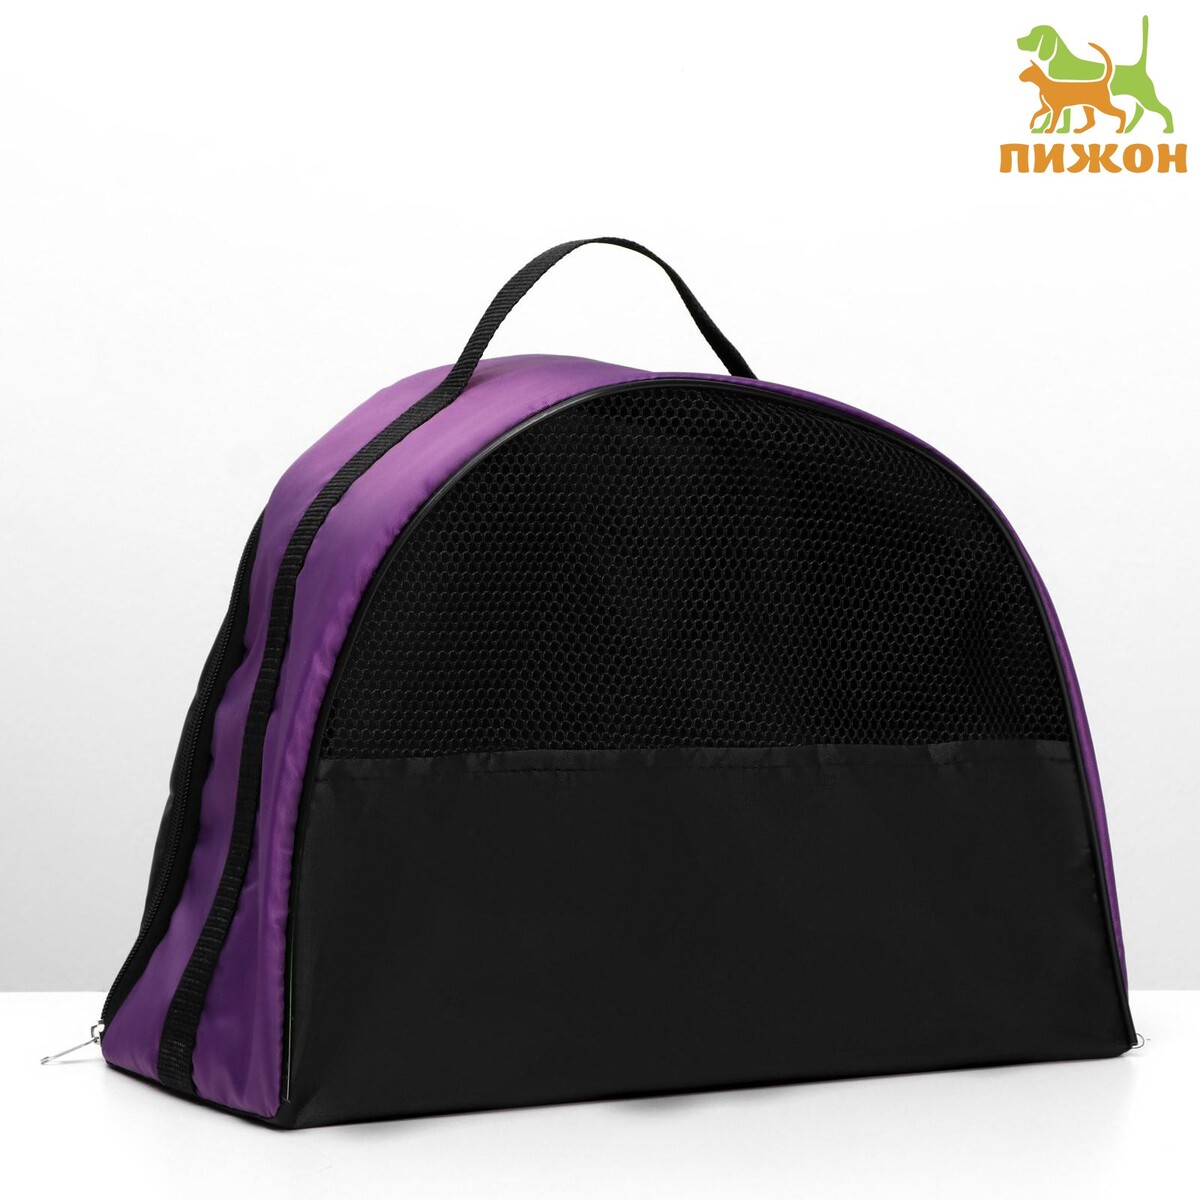 Сумка - переноска для животных, оксфорд, 39 х 19 х 27 см, фиолетовая сумка переноска сетчатая 52 х 25 х 33 см фиолетовая